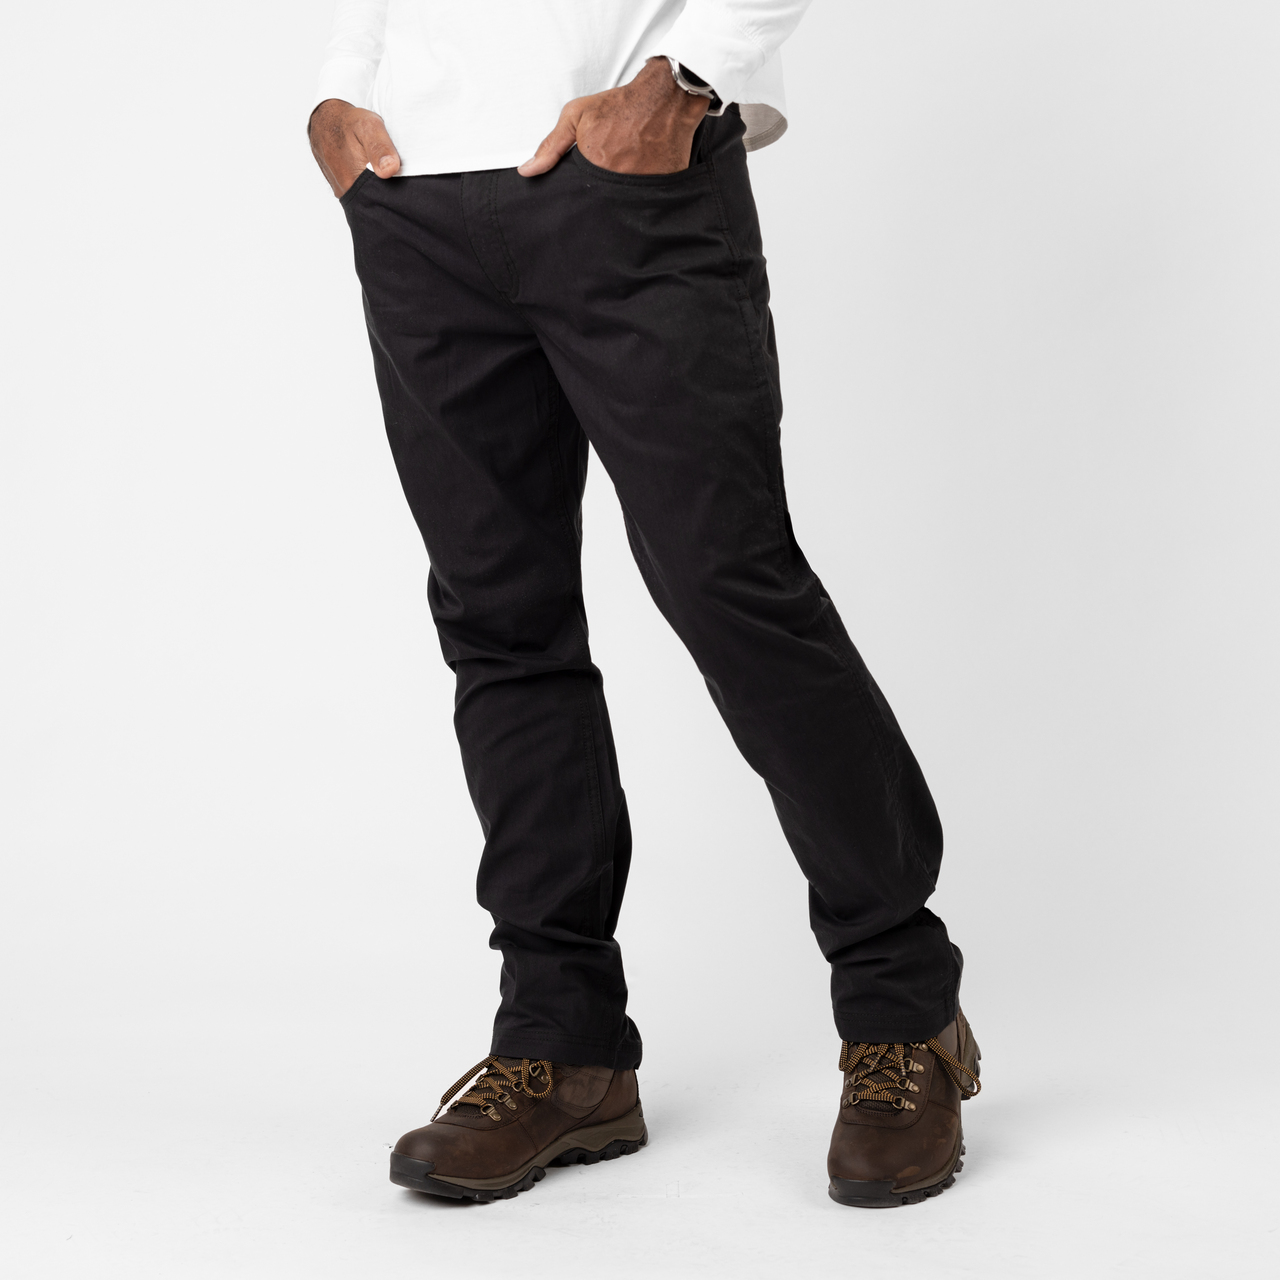 Black - Sierra Designs Men's Inyo Stretch Pant, front view